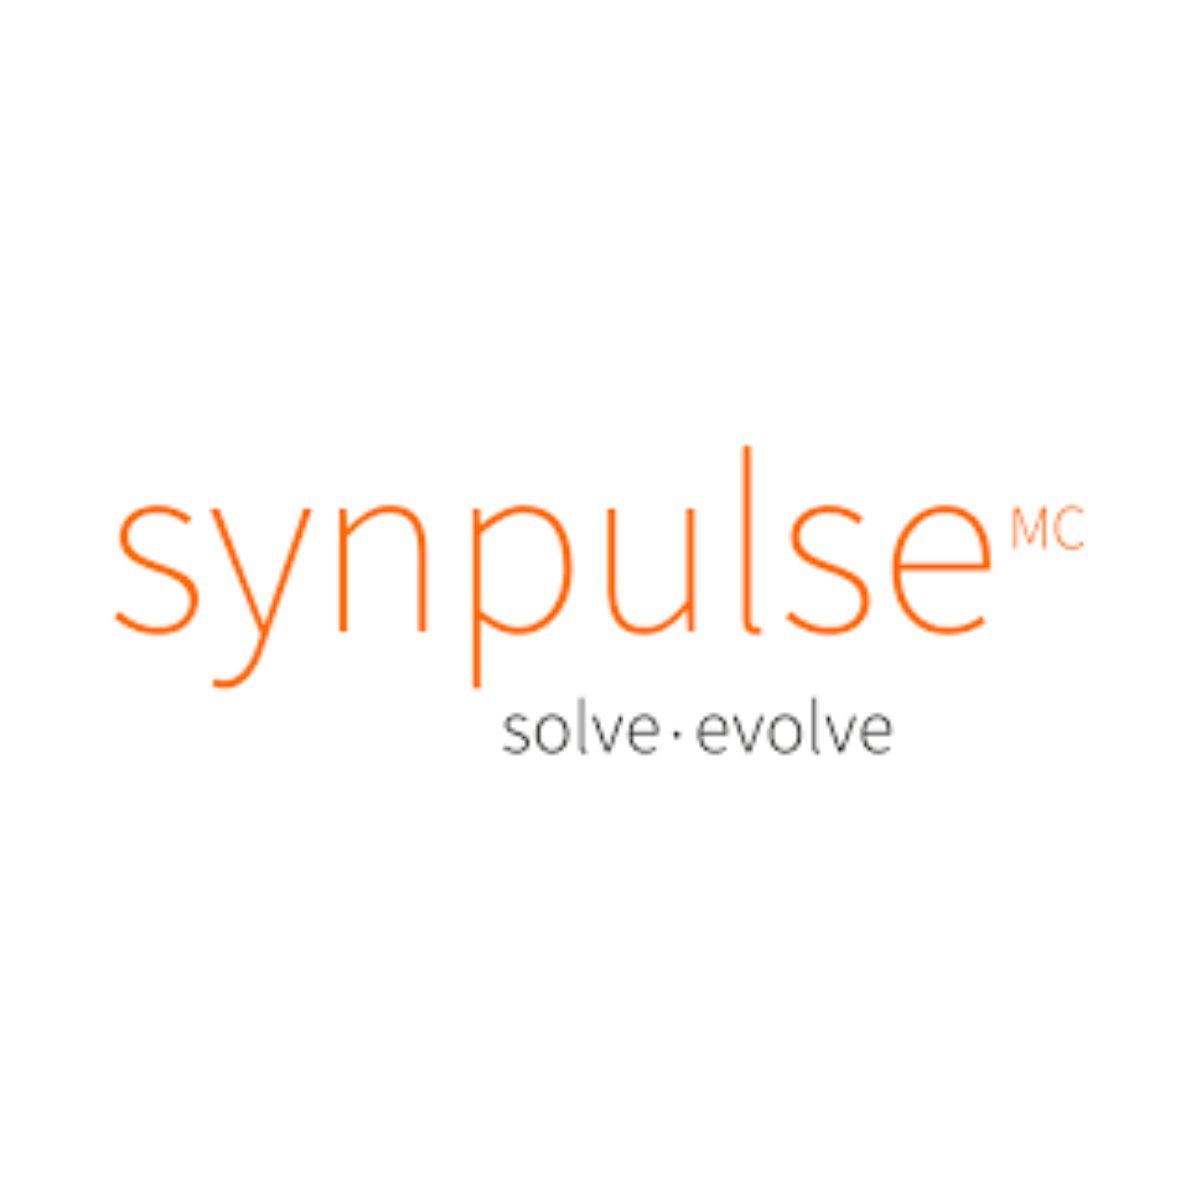 Synpulse logo.